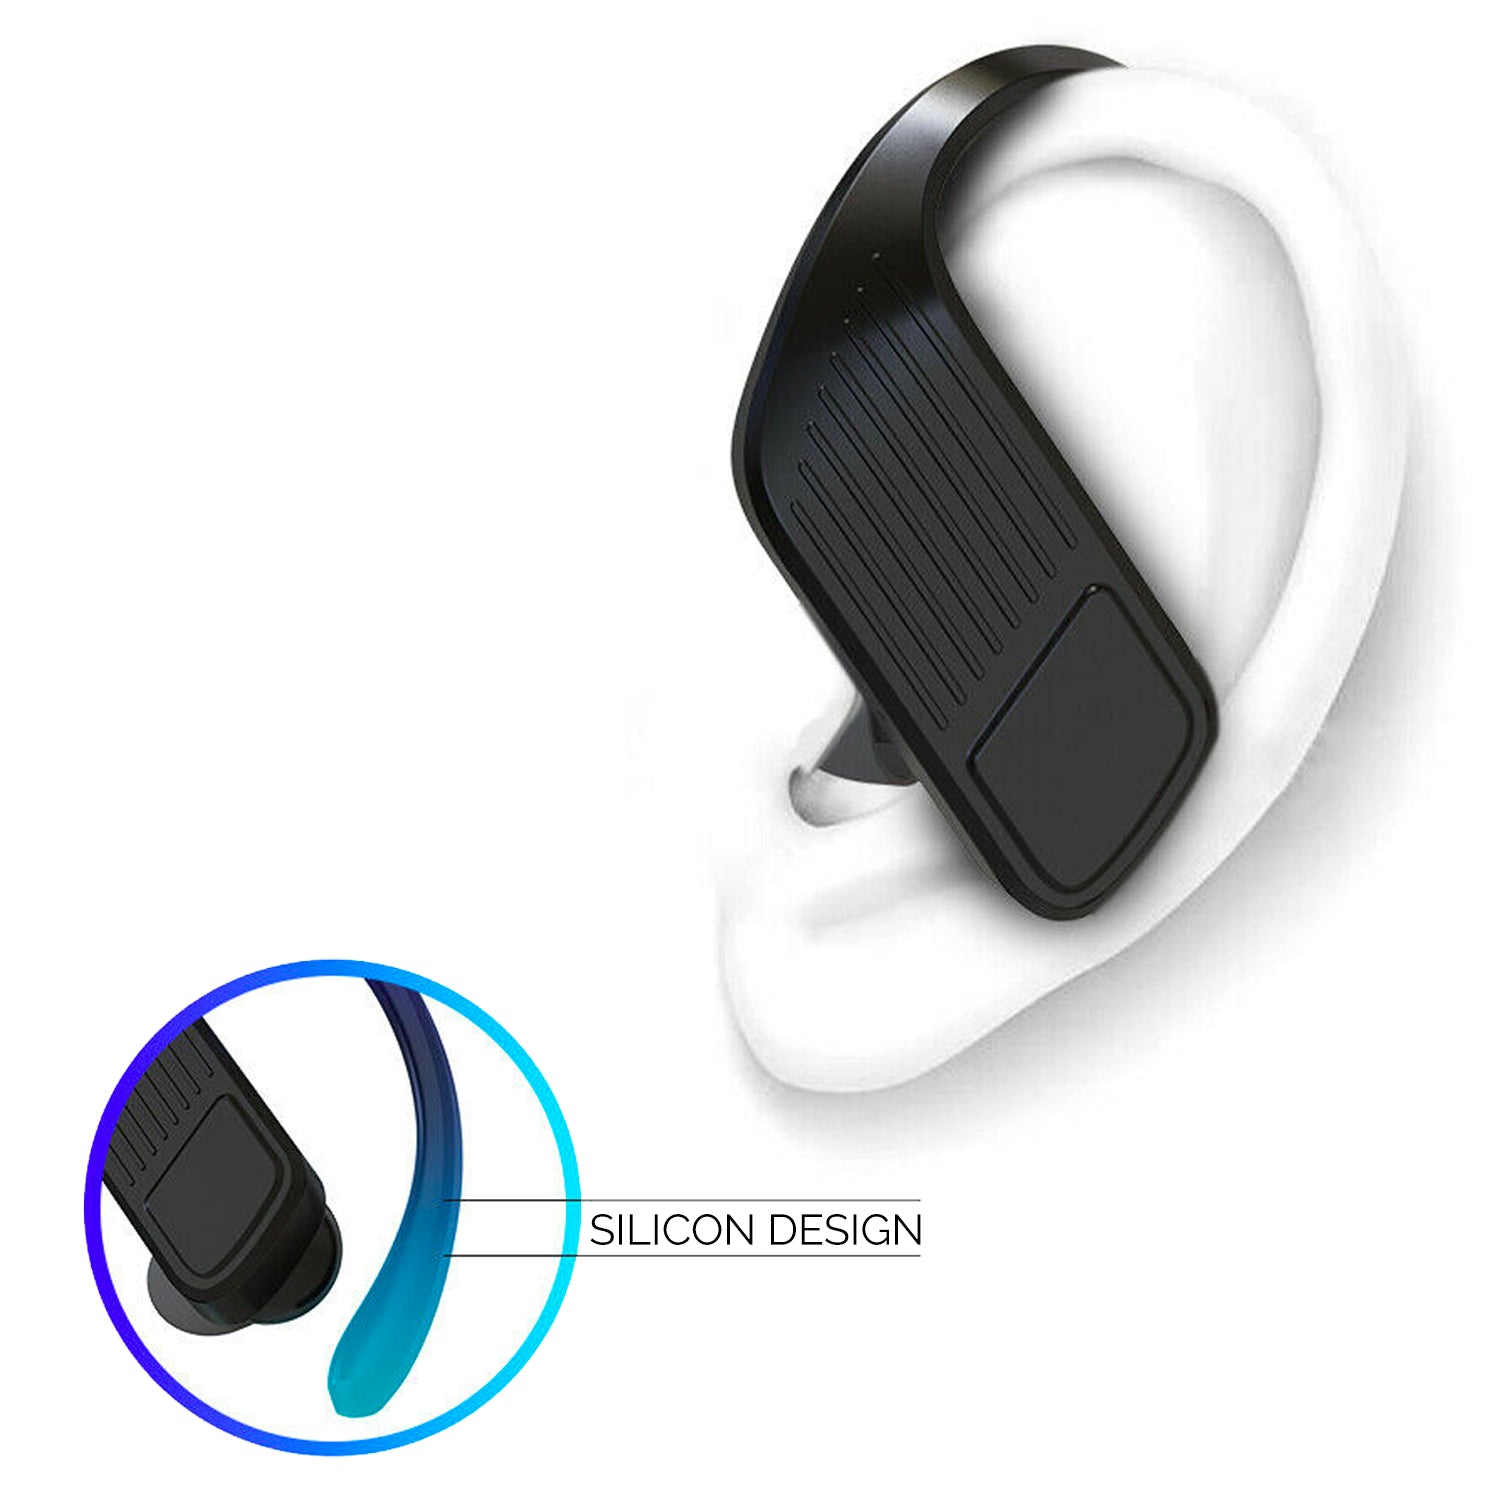 Prime In Ear Stereo Bluetooth Headphones